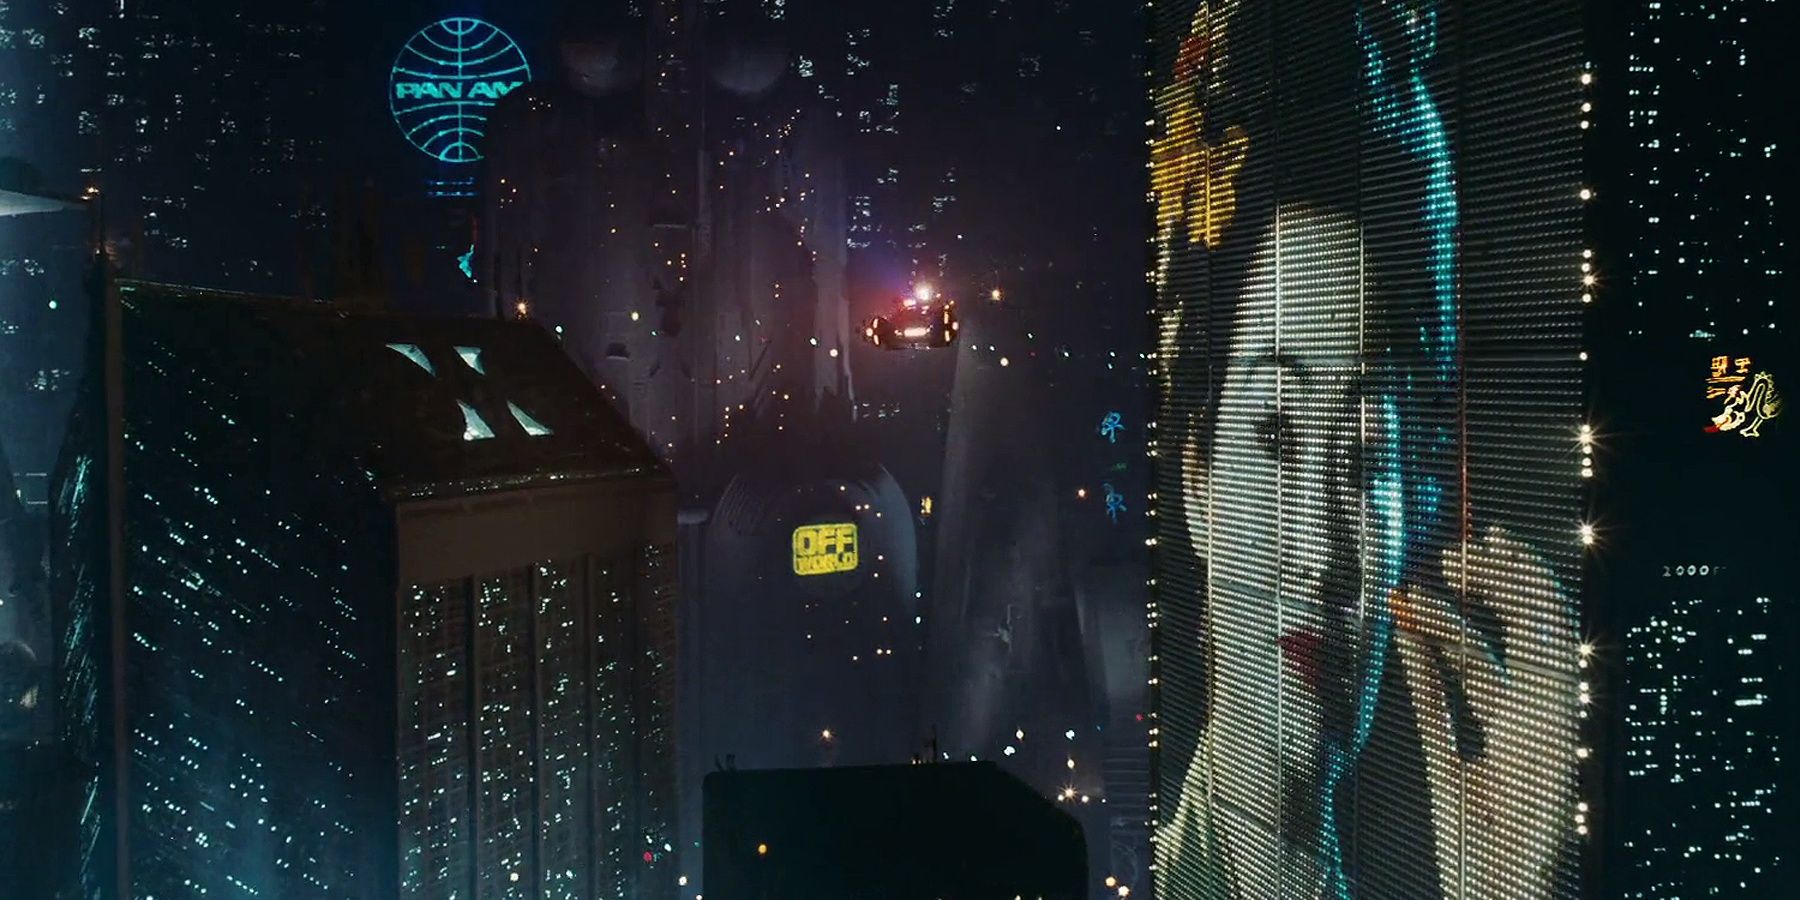 The city in Blade Runner